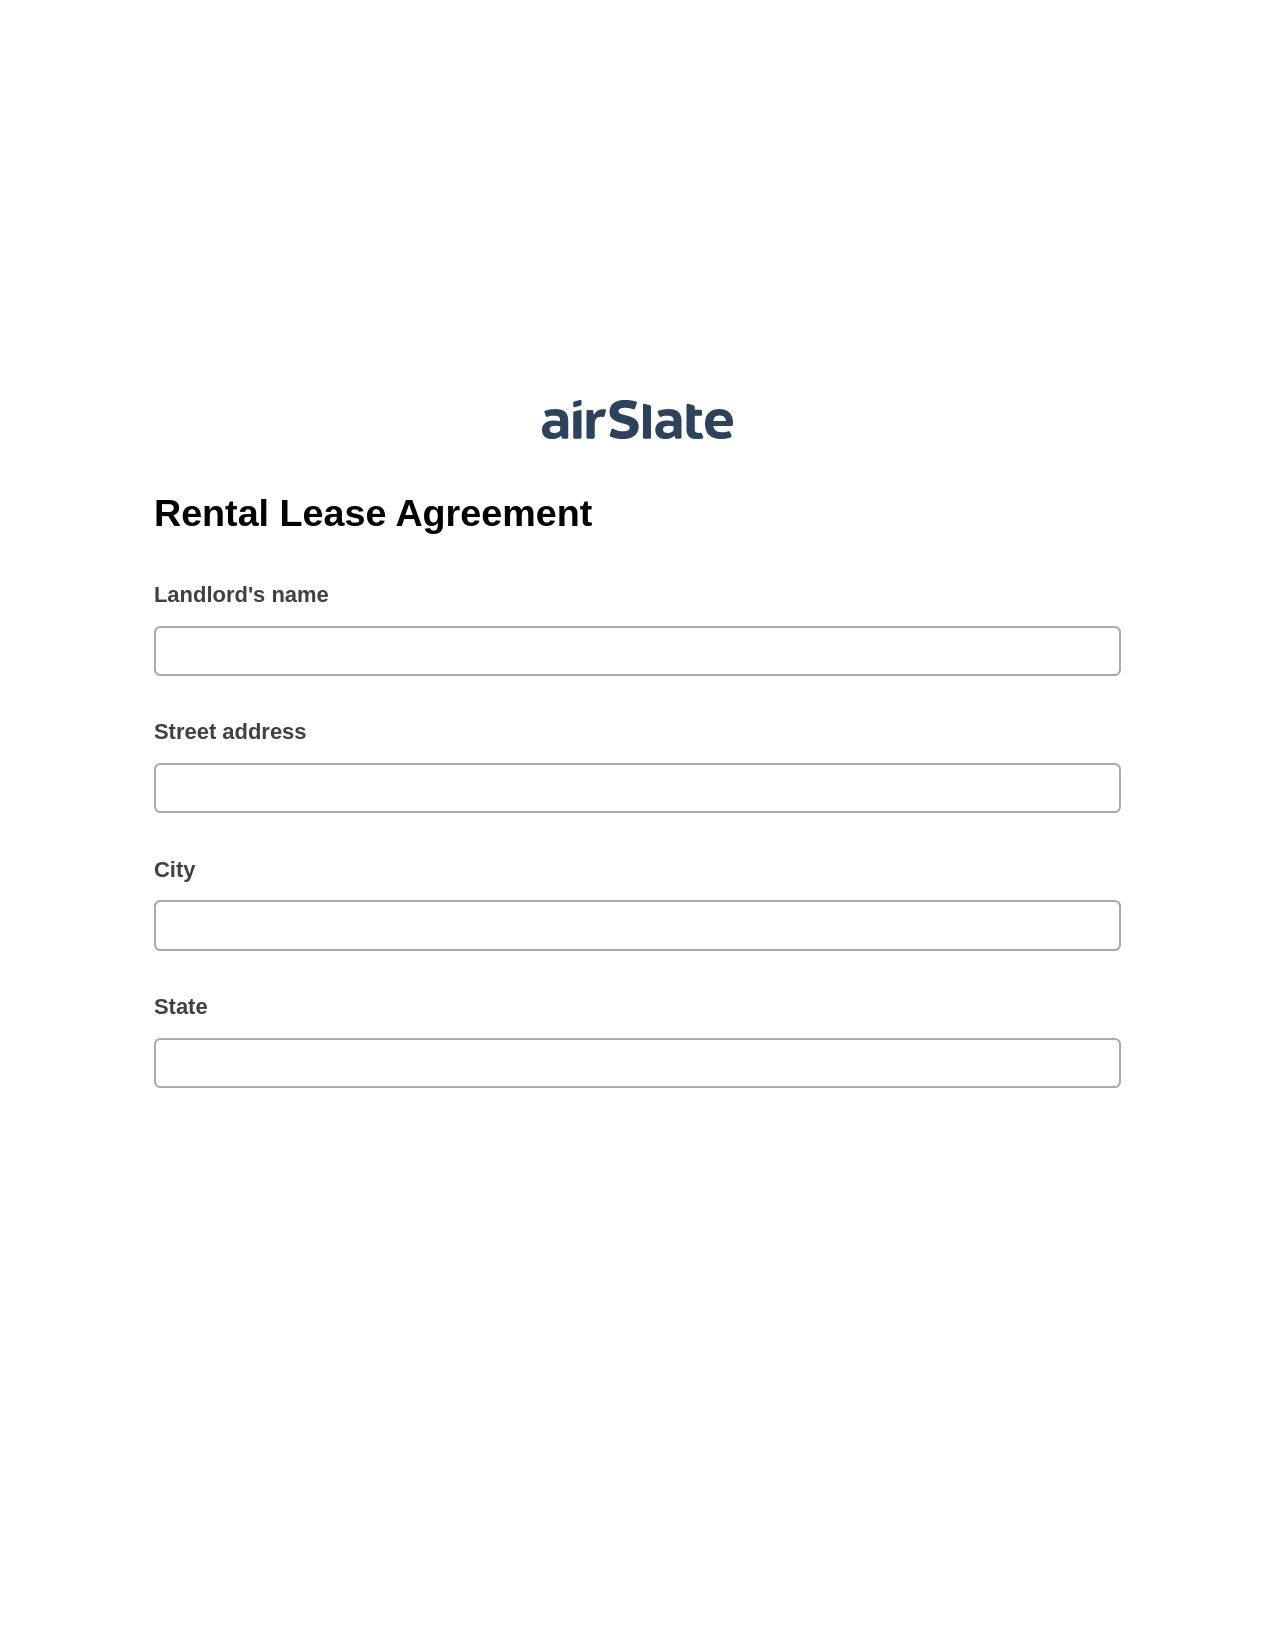 Multirole Rental Lease Agreement Pre-fill from Google Sheet Dropdown Options Bot, Invoke Salesforce Process Bot, Post-finish Document Bot